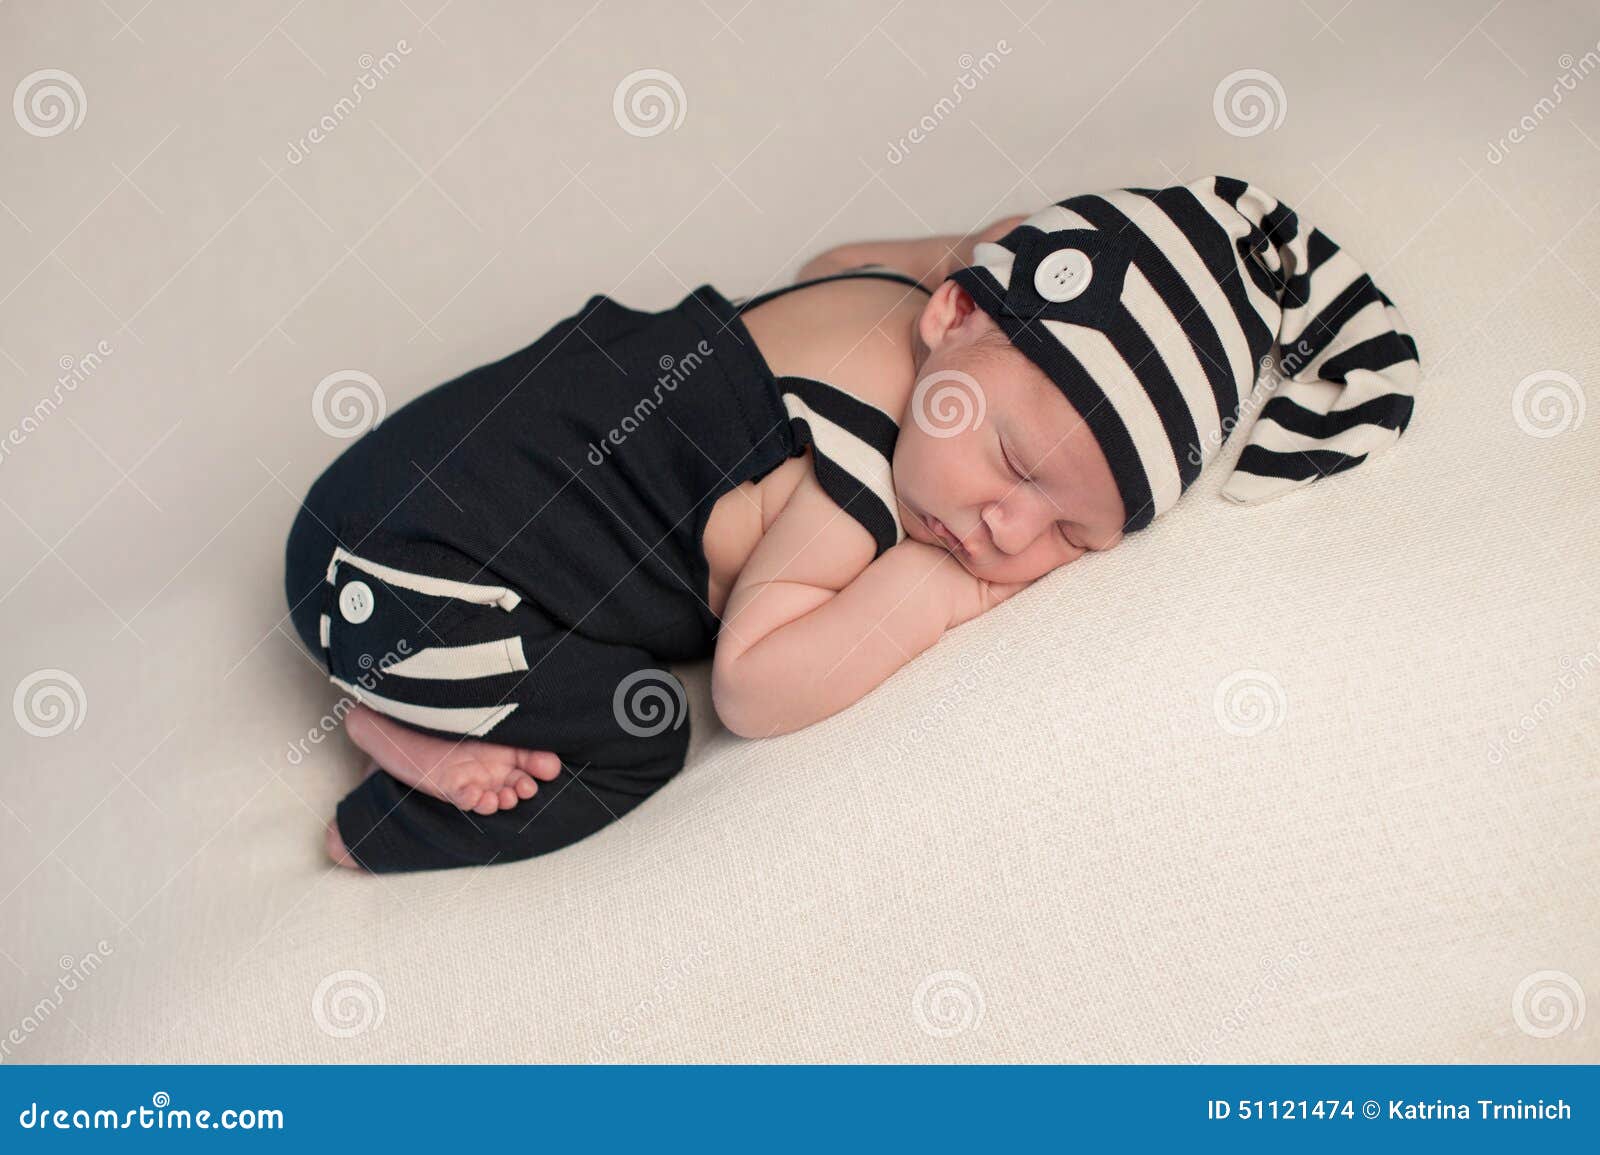 sleeping baby boy in romper & hat